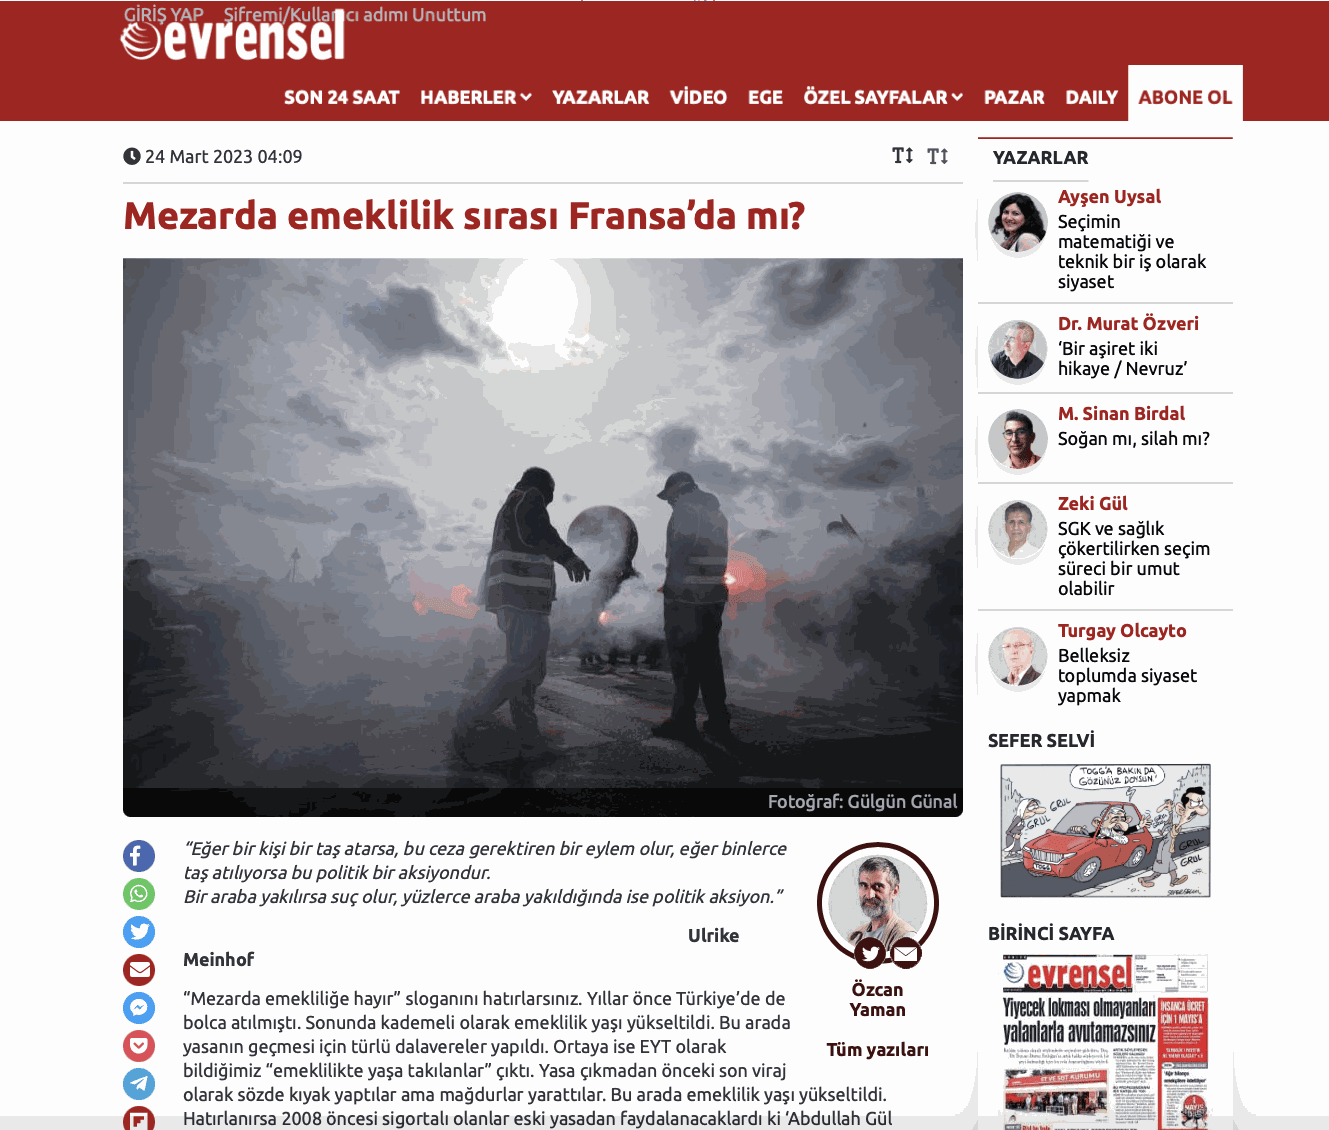 The Evrensel (Universal) Newspaper